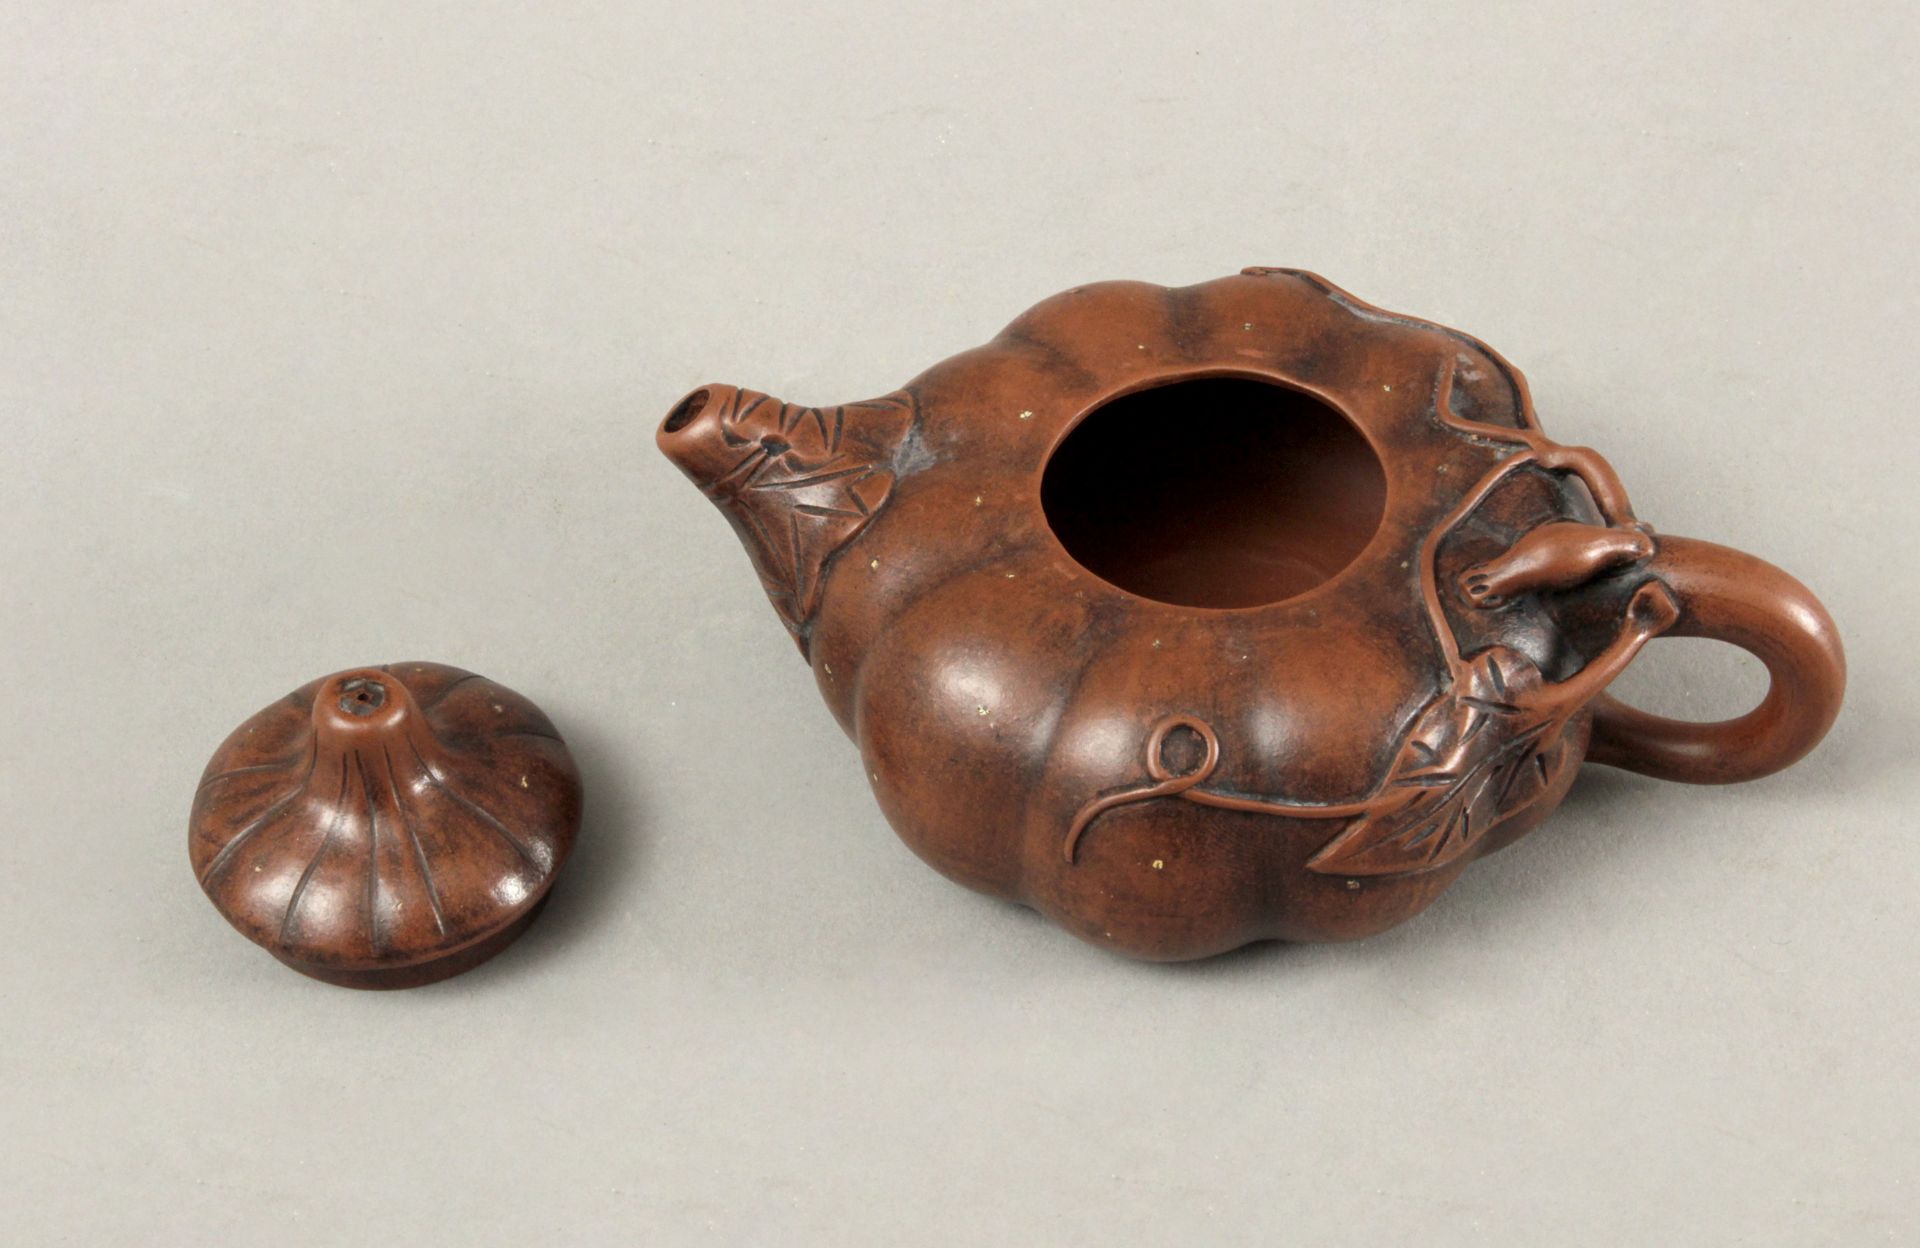 20th century Chinese Republic period yixing teapot - Image 3 of 4